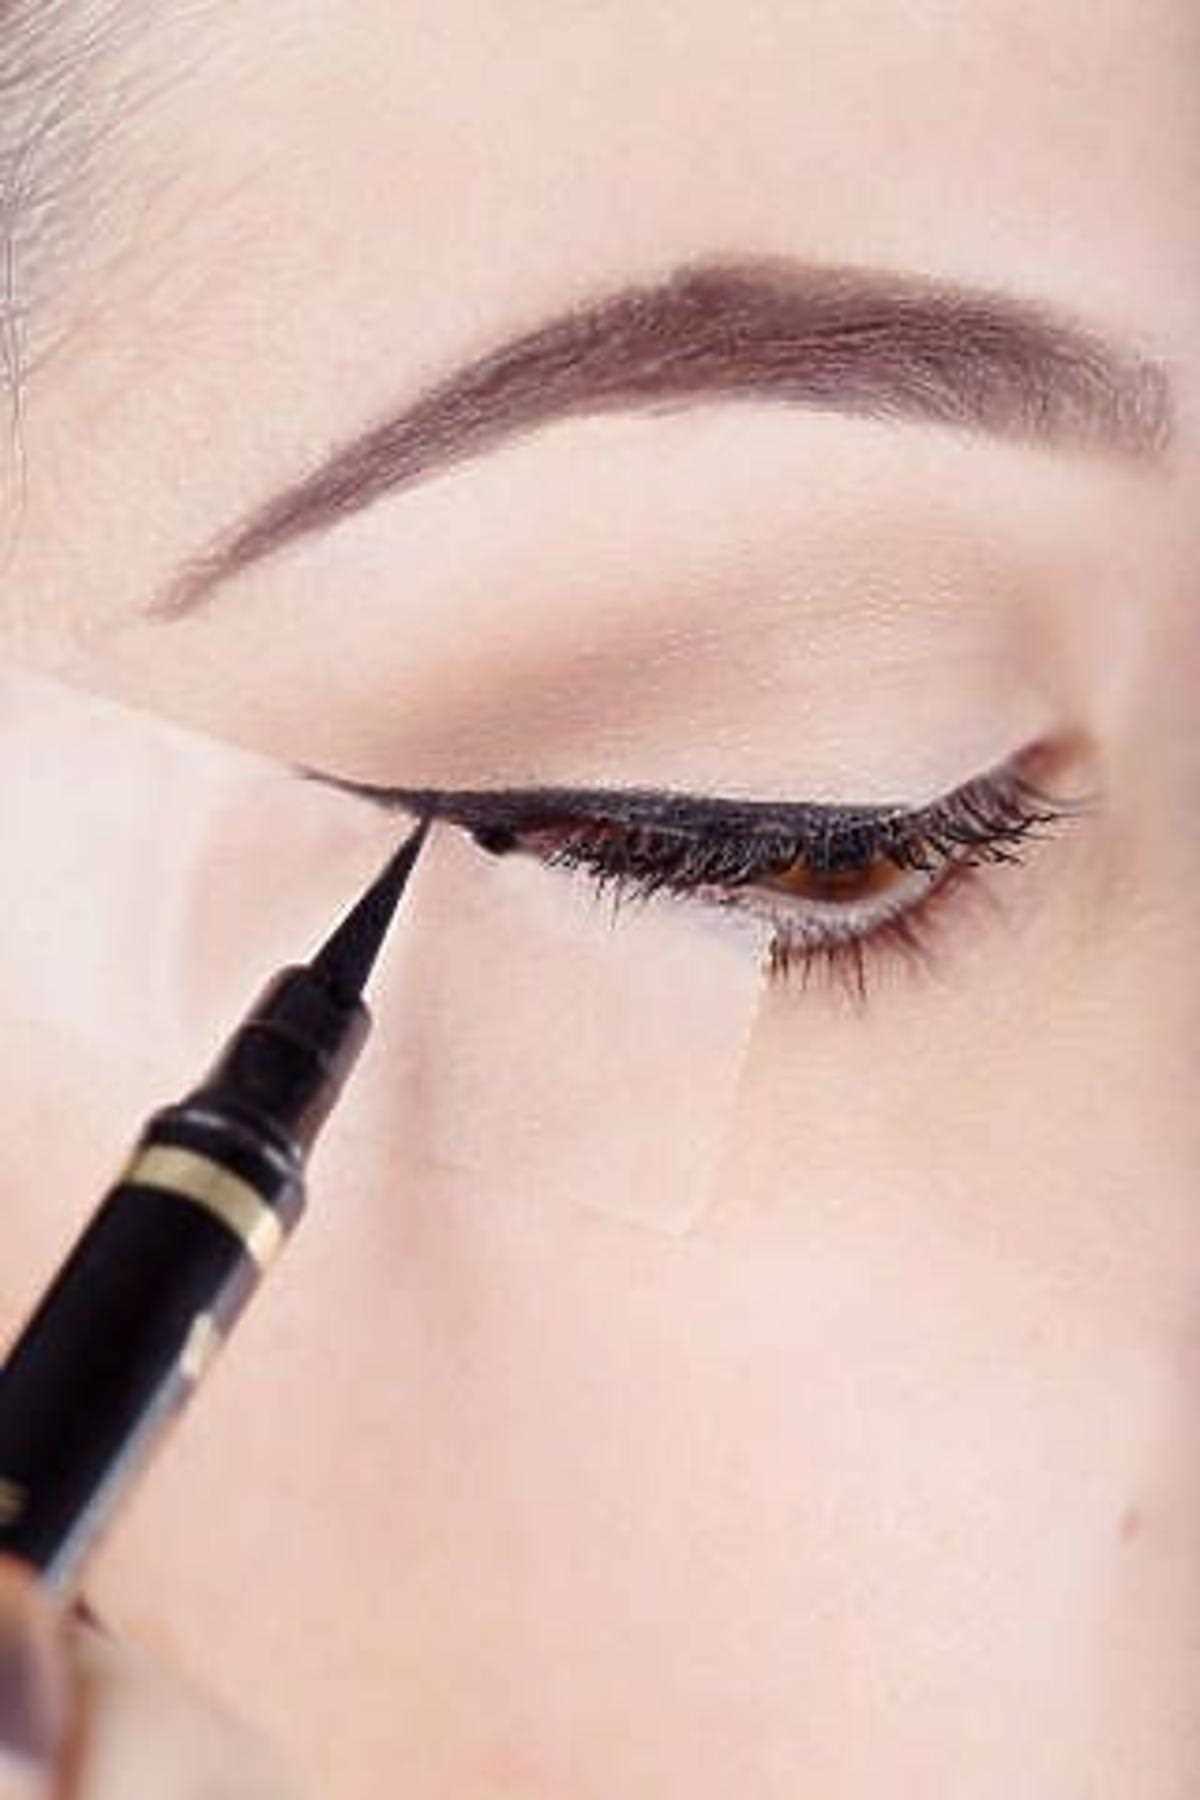 Kreski eyelinerem wzory - jak je zrobić porady i inspiracje